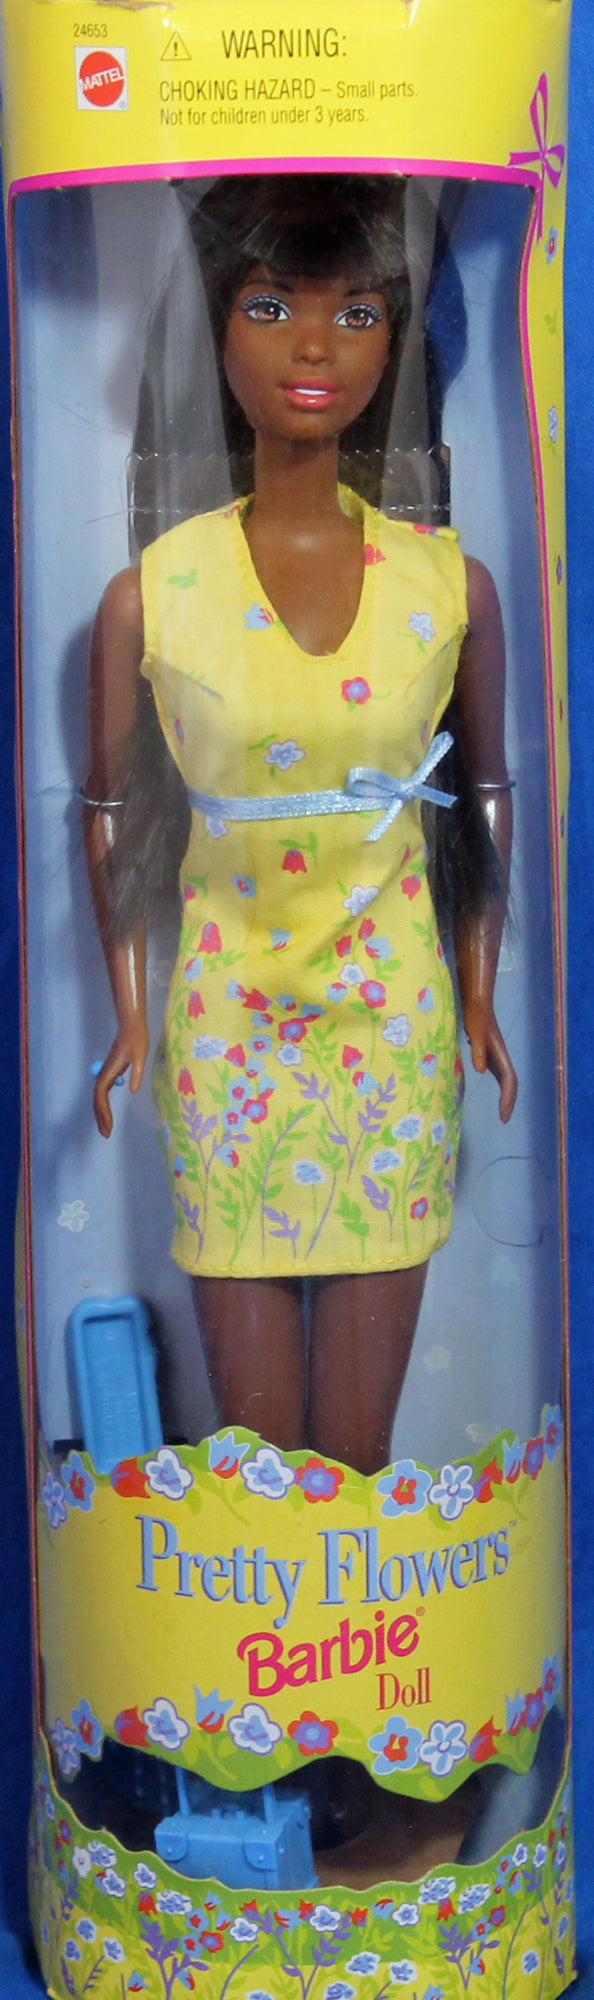 Barbie 24653 MIB 1999 Pretty Flowers Yellow Dress African American